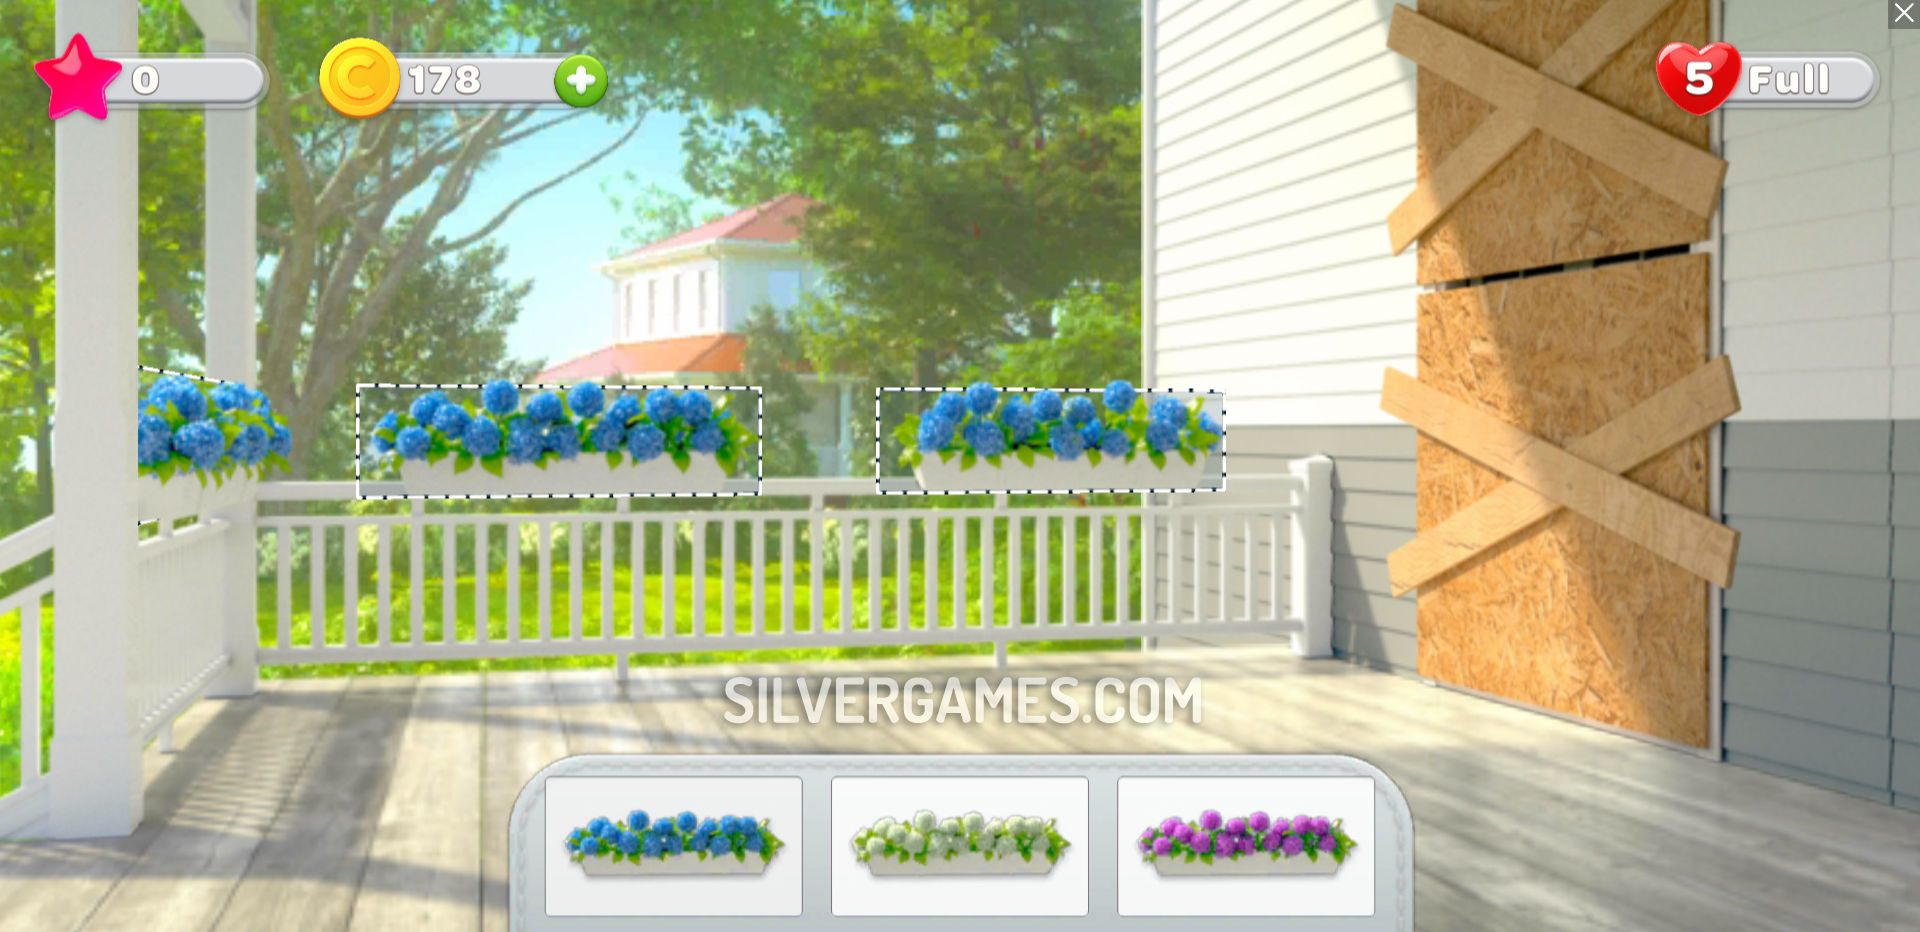 Jacksmith - Play Online on SilverGames 🕹️